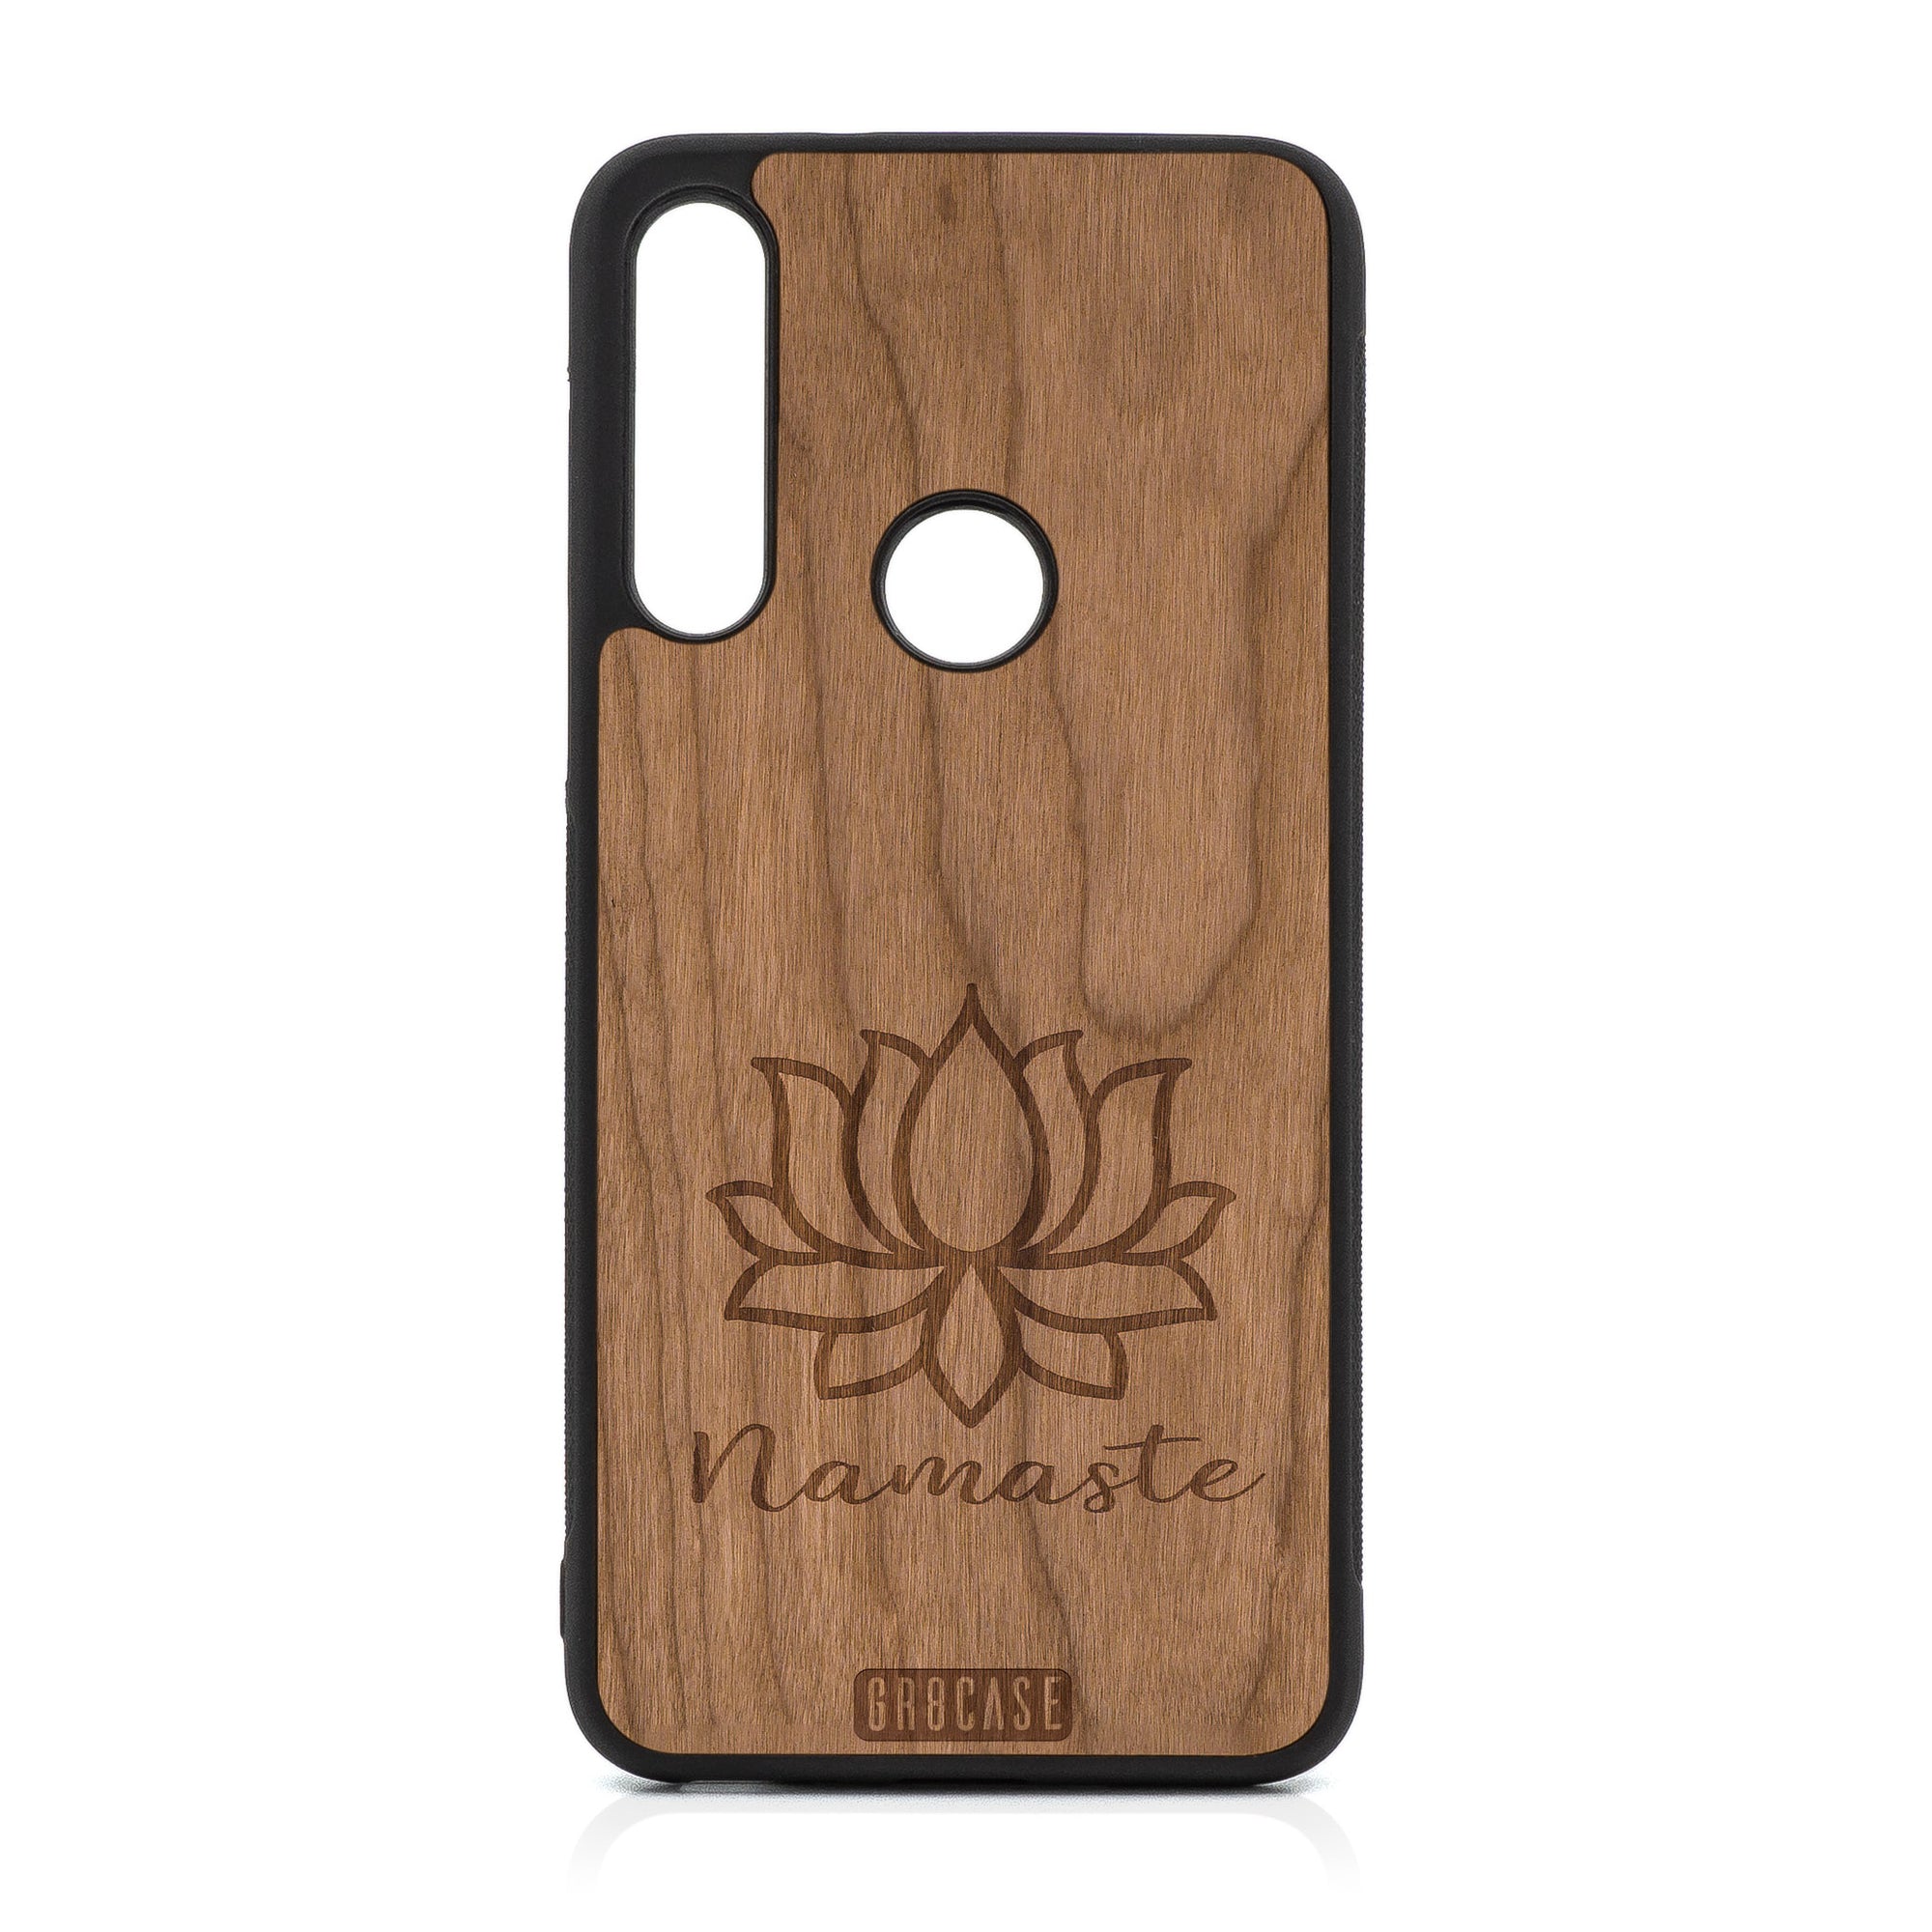 Namaste (Lotus Flower) Design Wood Case For Moto G Fast